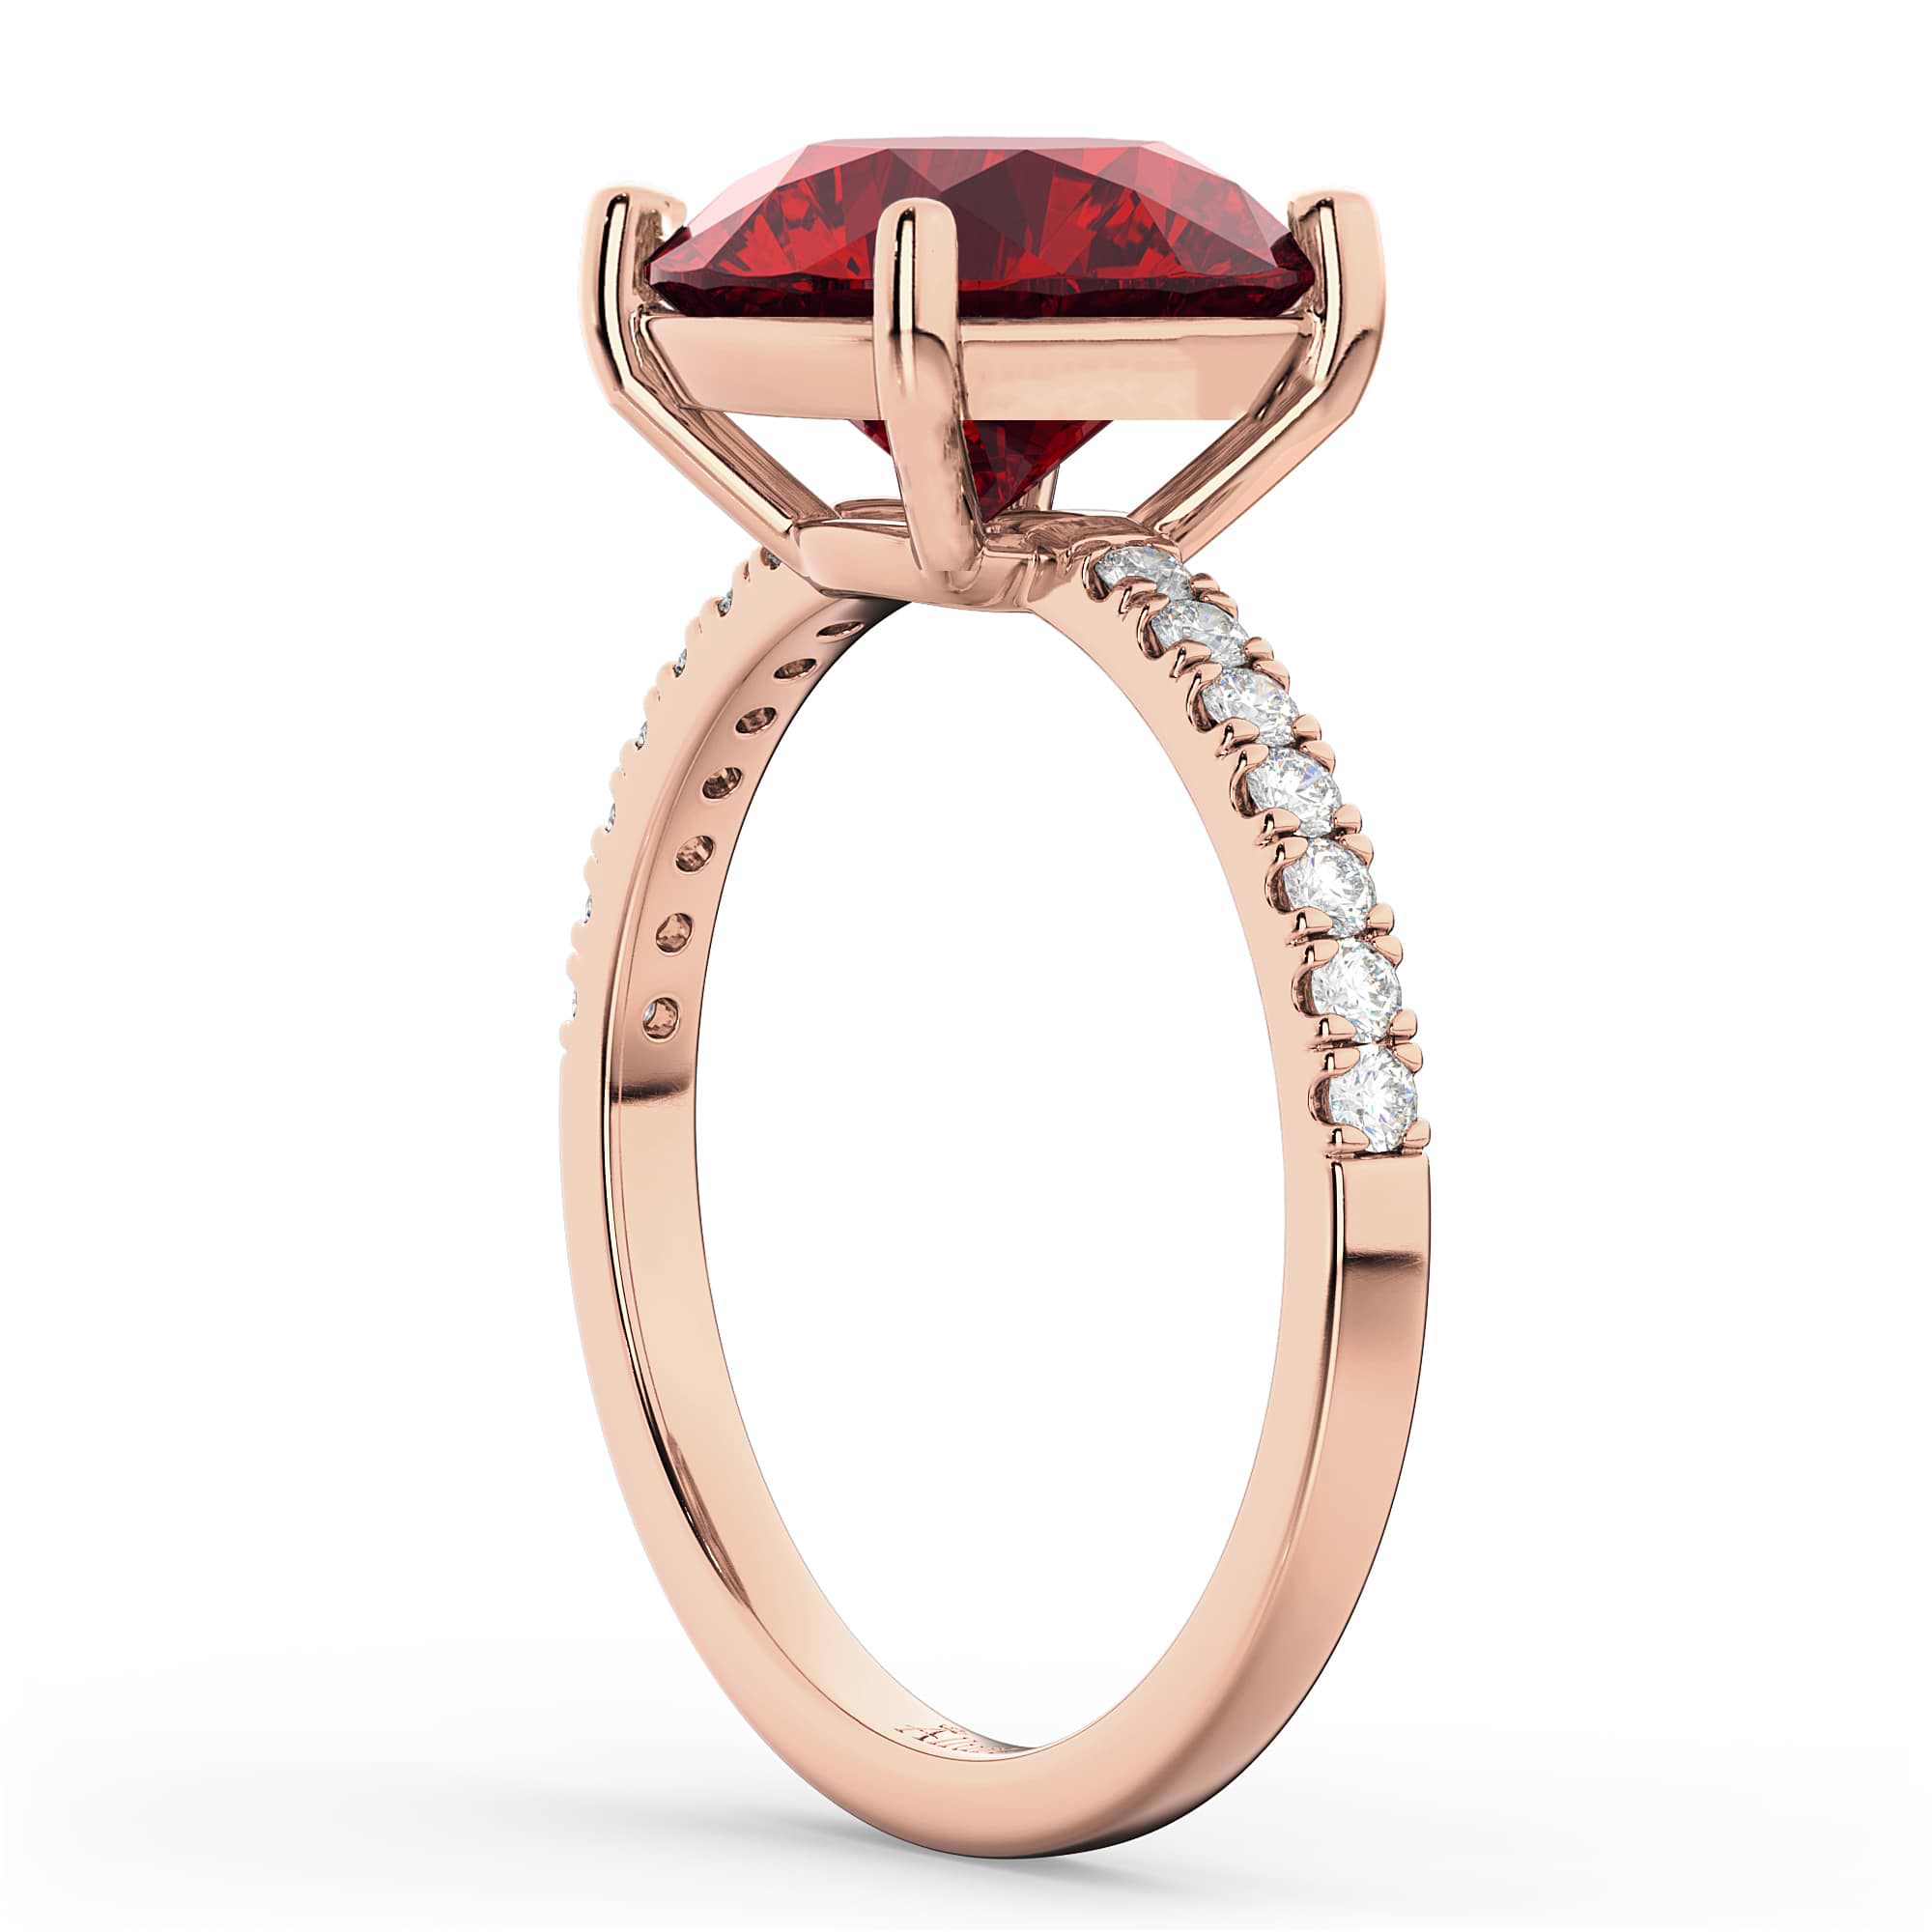 Ruby & Diamond Engagement Ring 14K Rose Gold 2.51ct